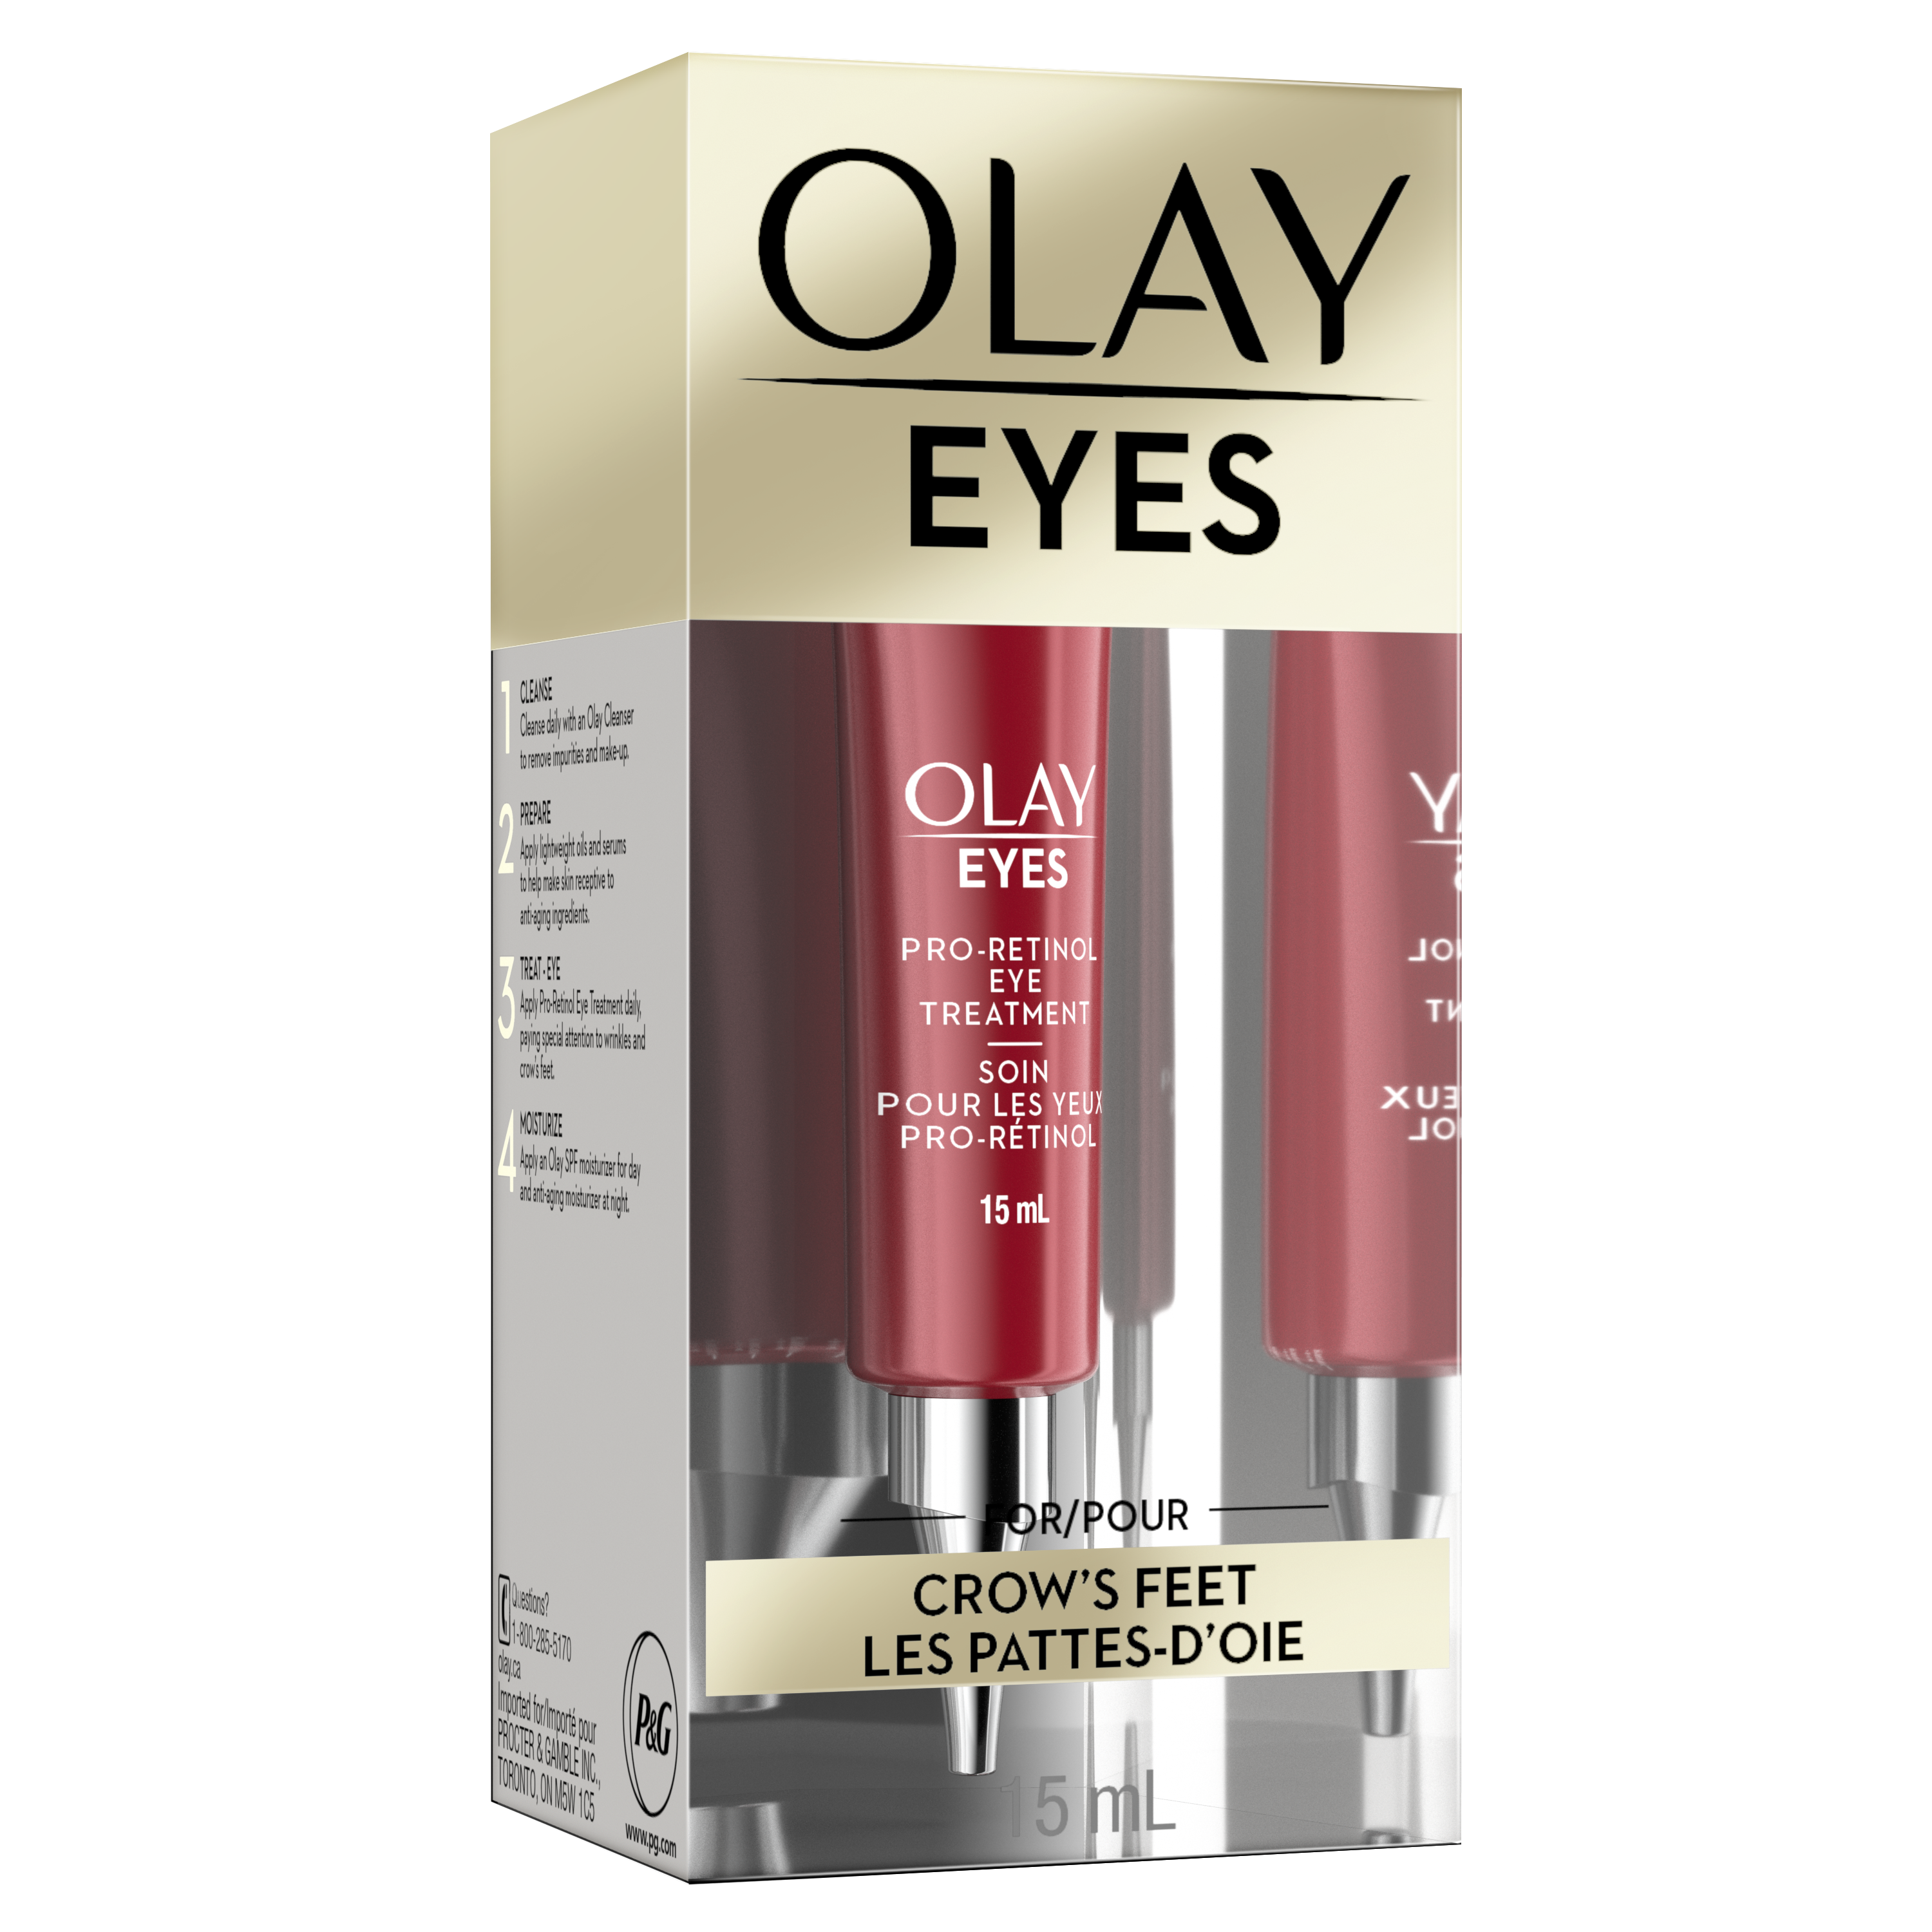 Olay Eyes Pro Retinol Eye Treatment for Wrinkles_2